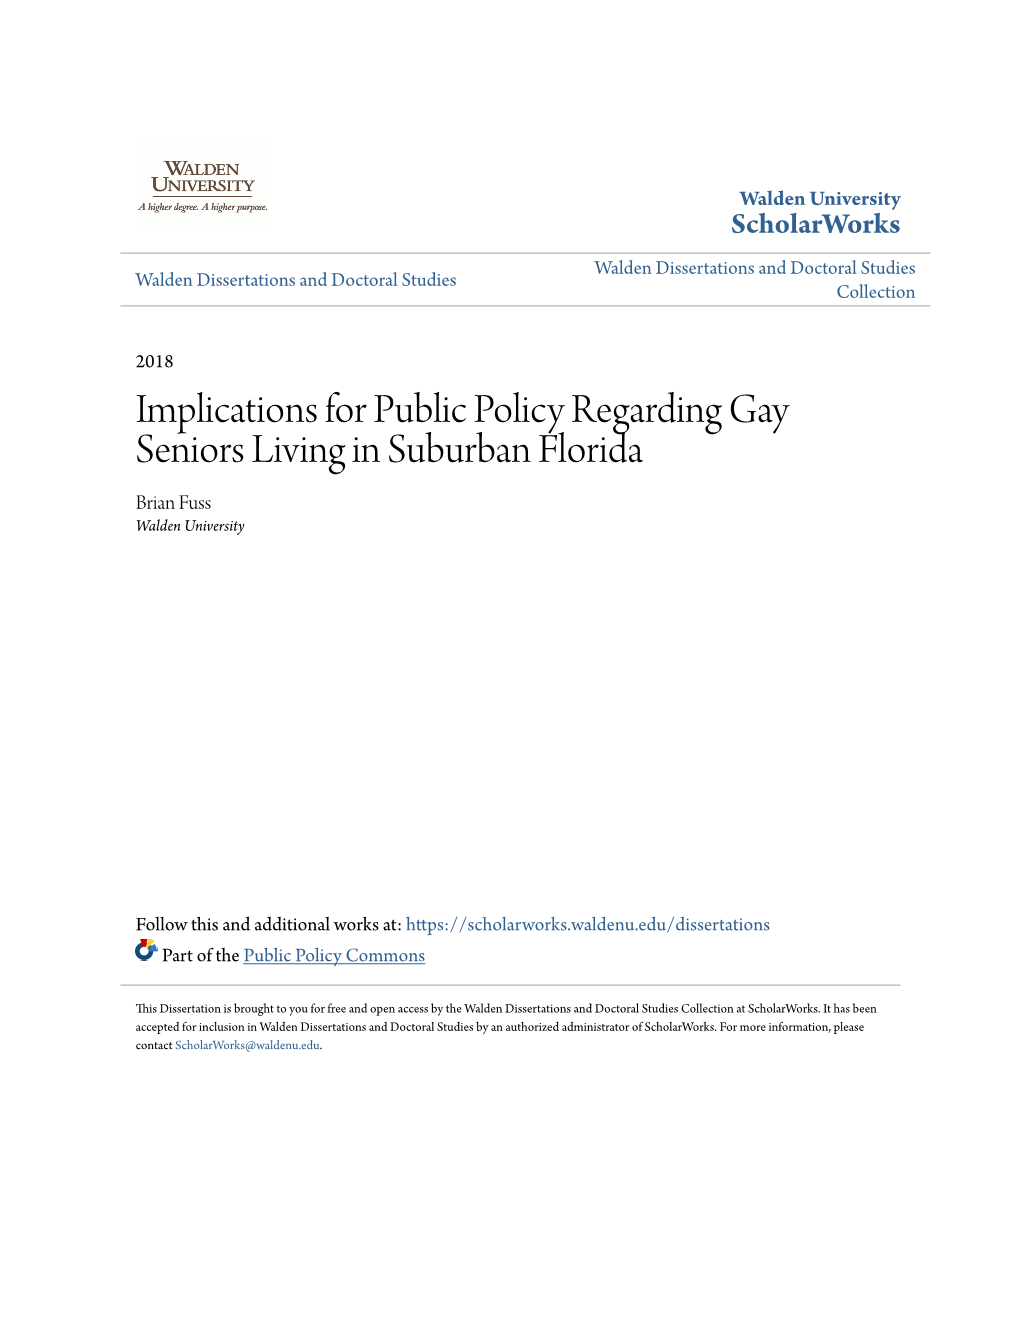 Implications for Public Policy Regarding Gay Seniors Living in Suburban Florida Brian Fuss Walden University